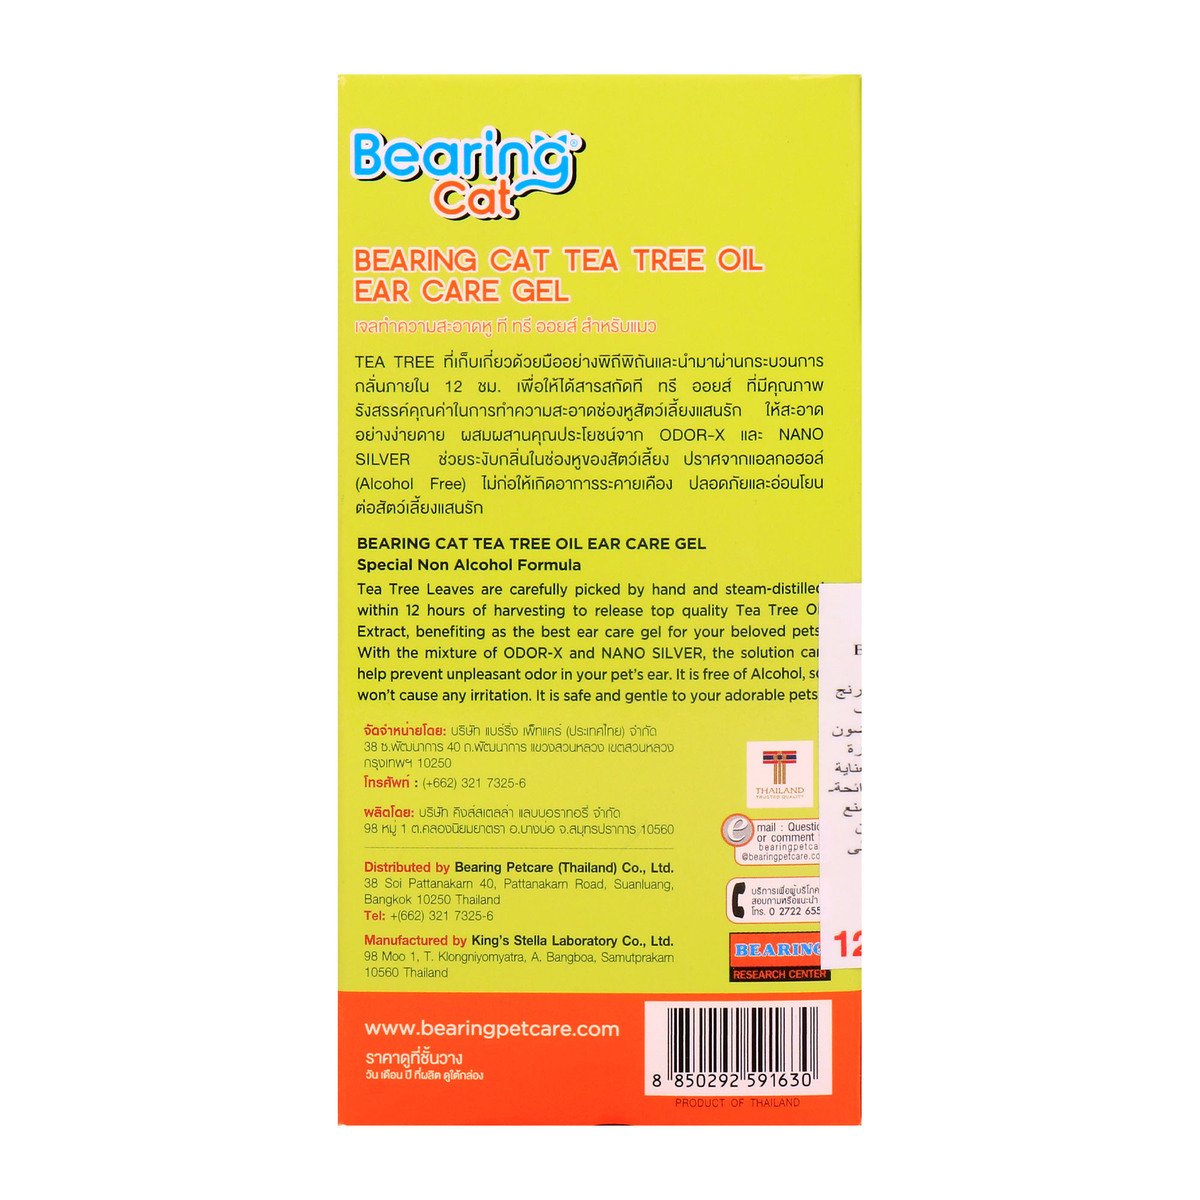 Bearing Cat Ear Care Gel, Tea Tree Oil, 100 ml